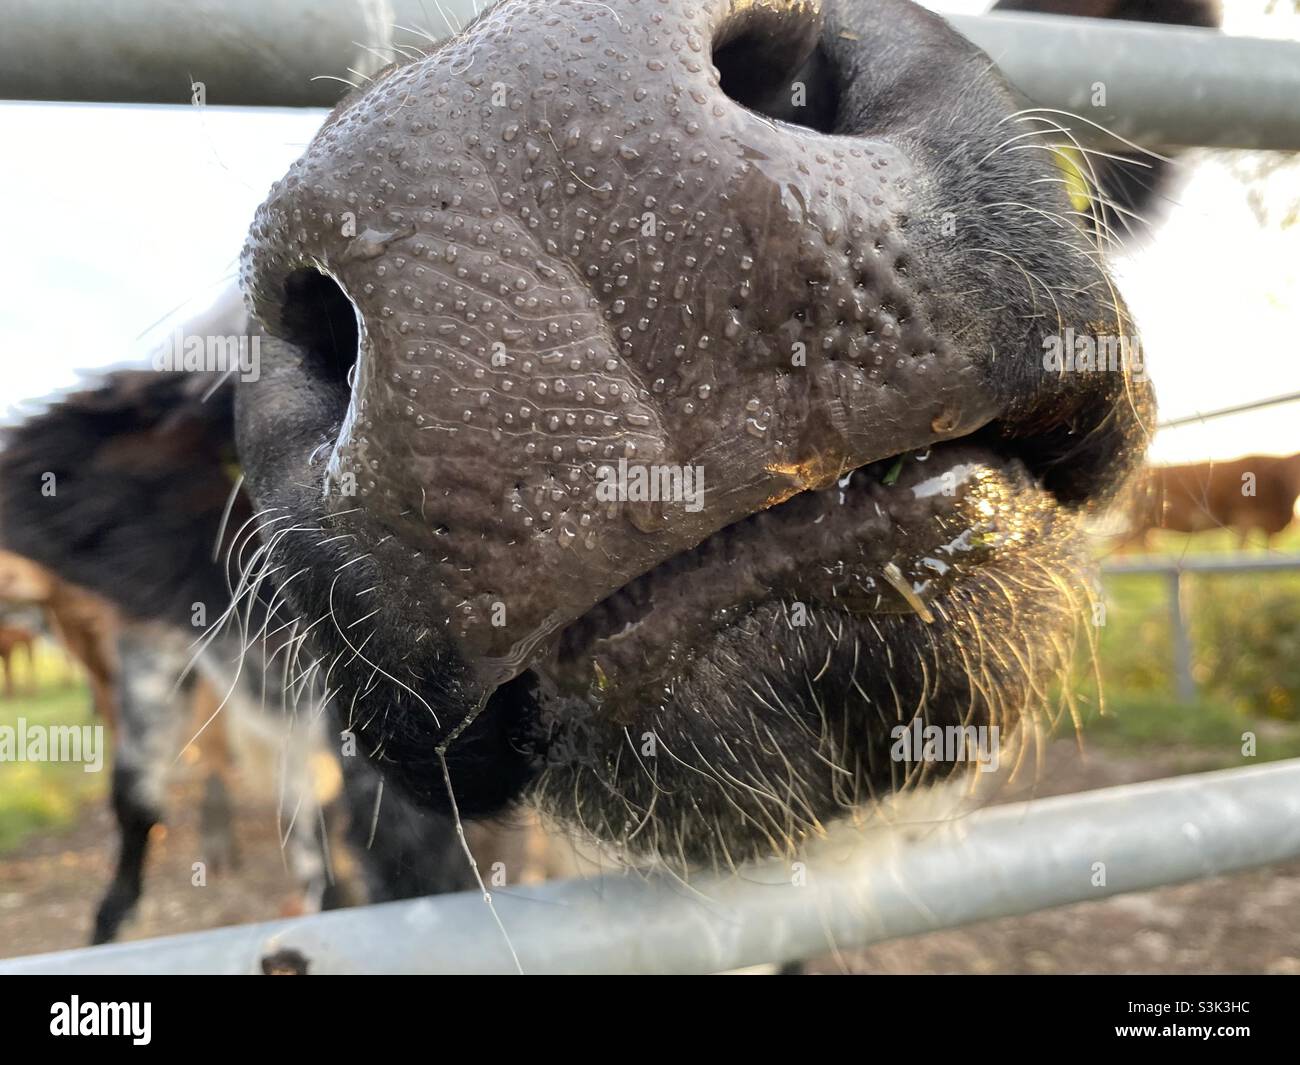 Cows nose boop Stock Photo